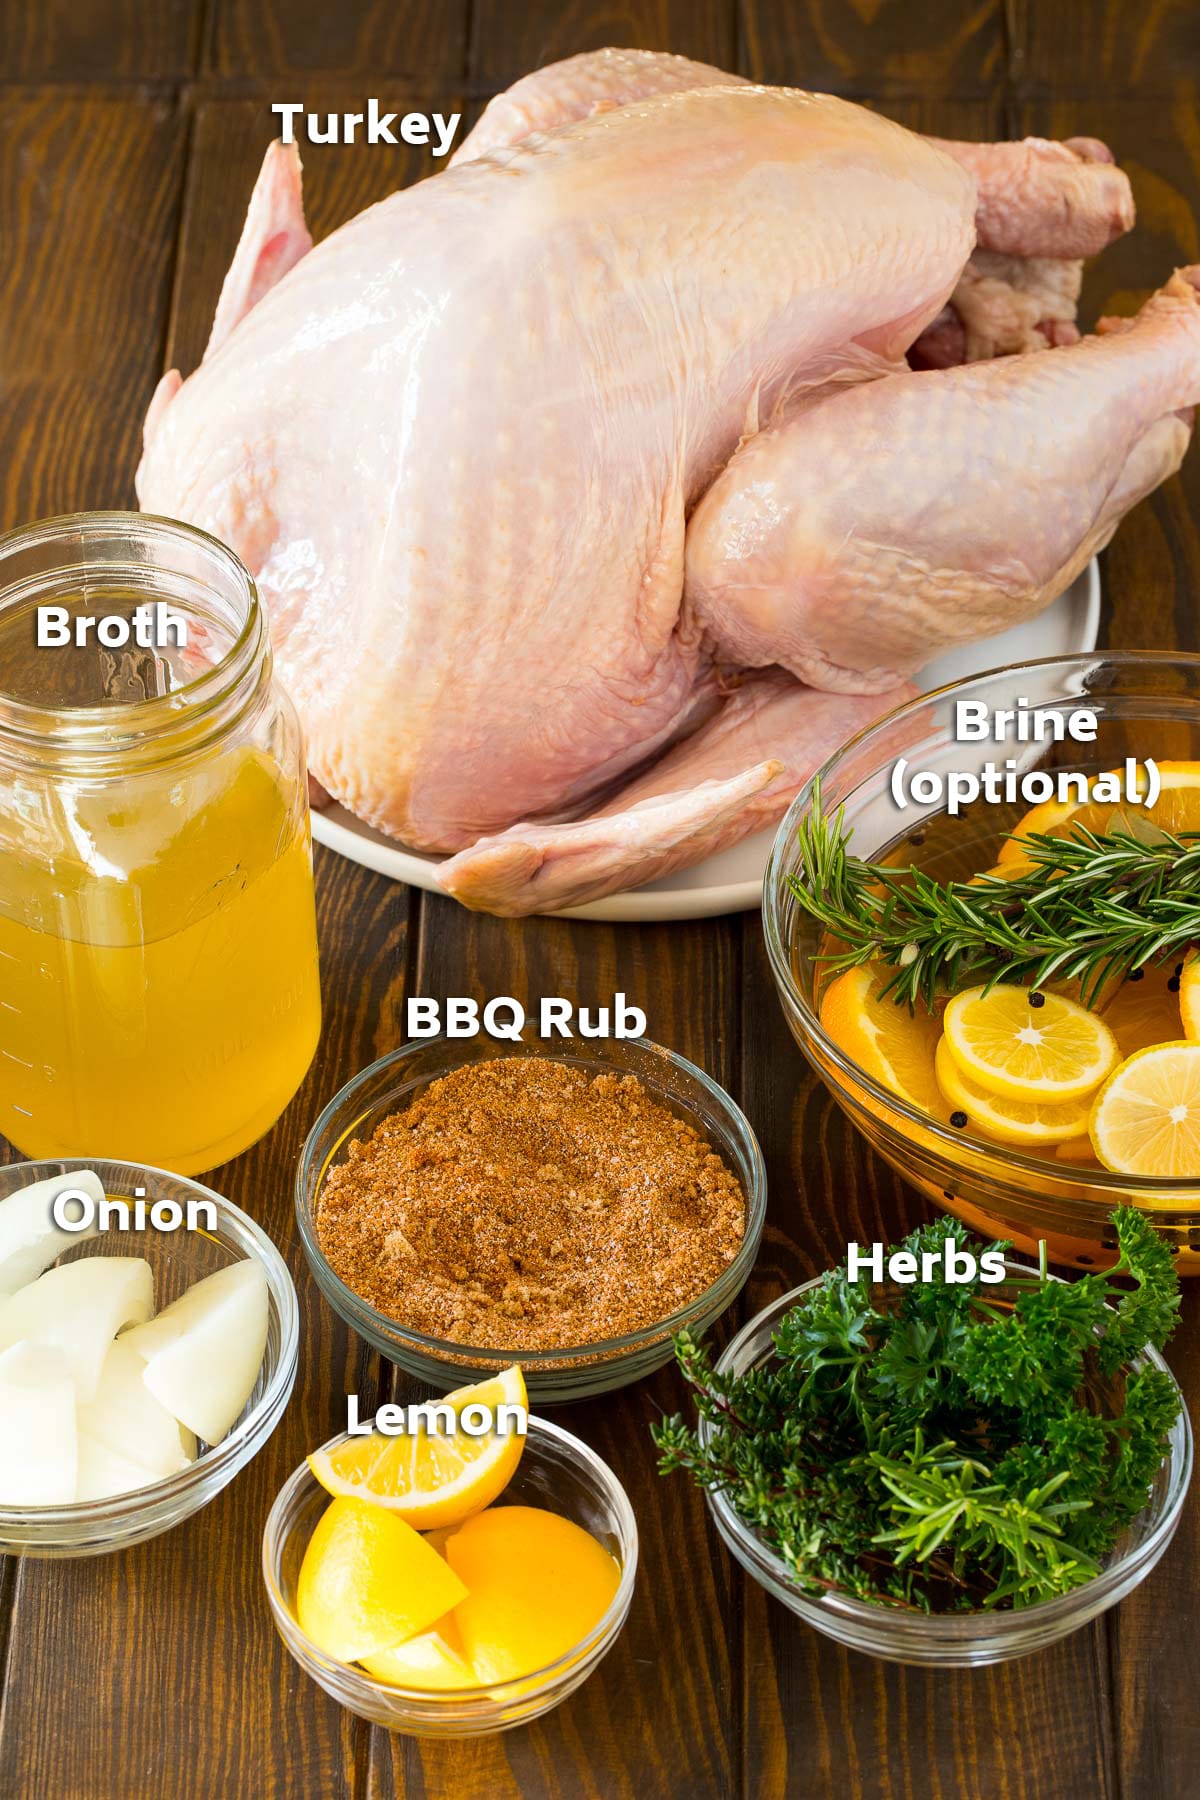 Ingredients including turkey, turkey brine, chicken broth, herbs, spice rub and lemon.